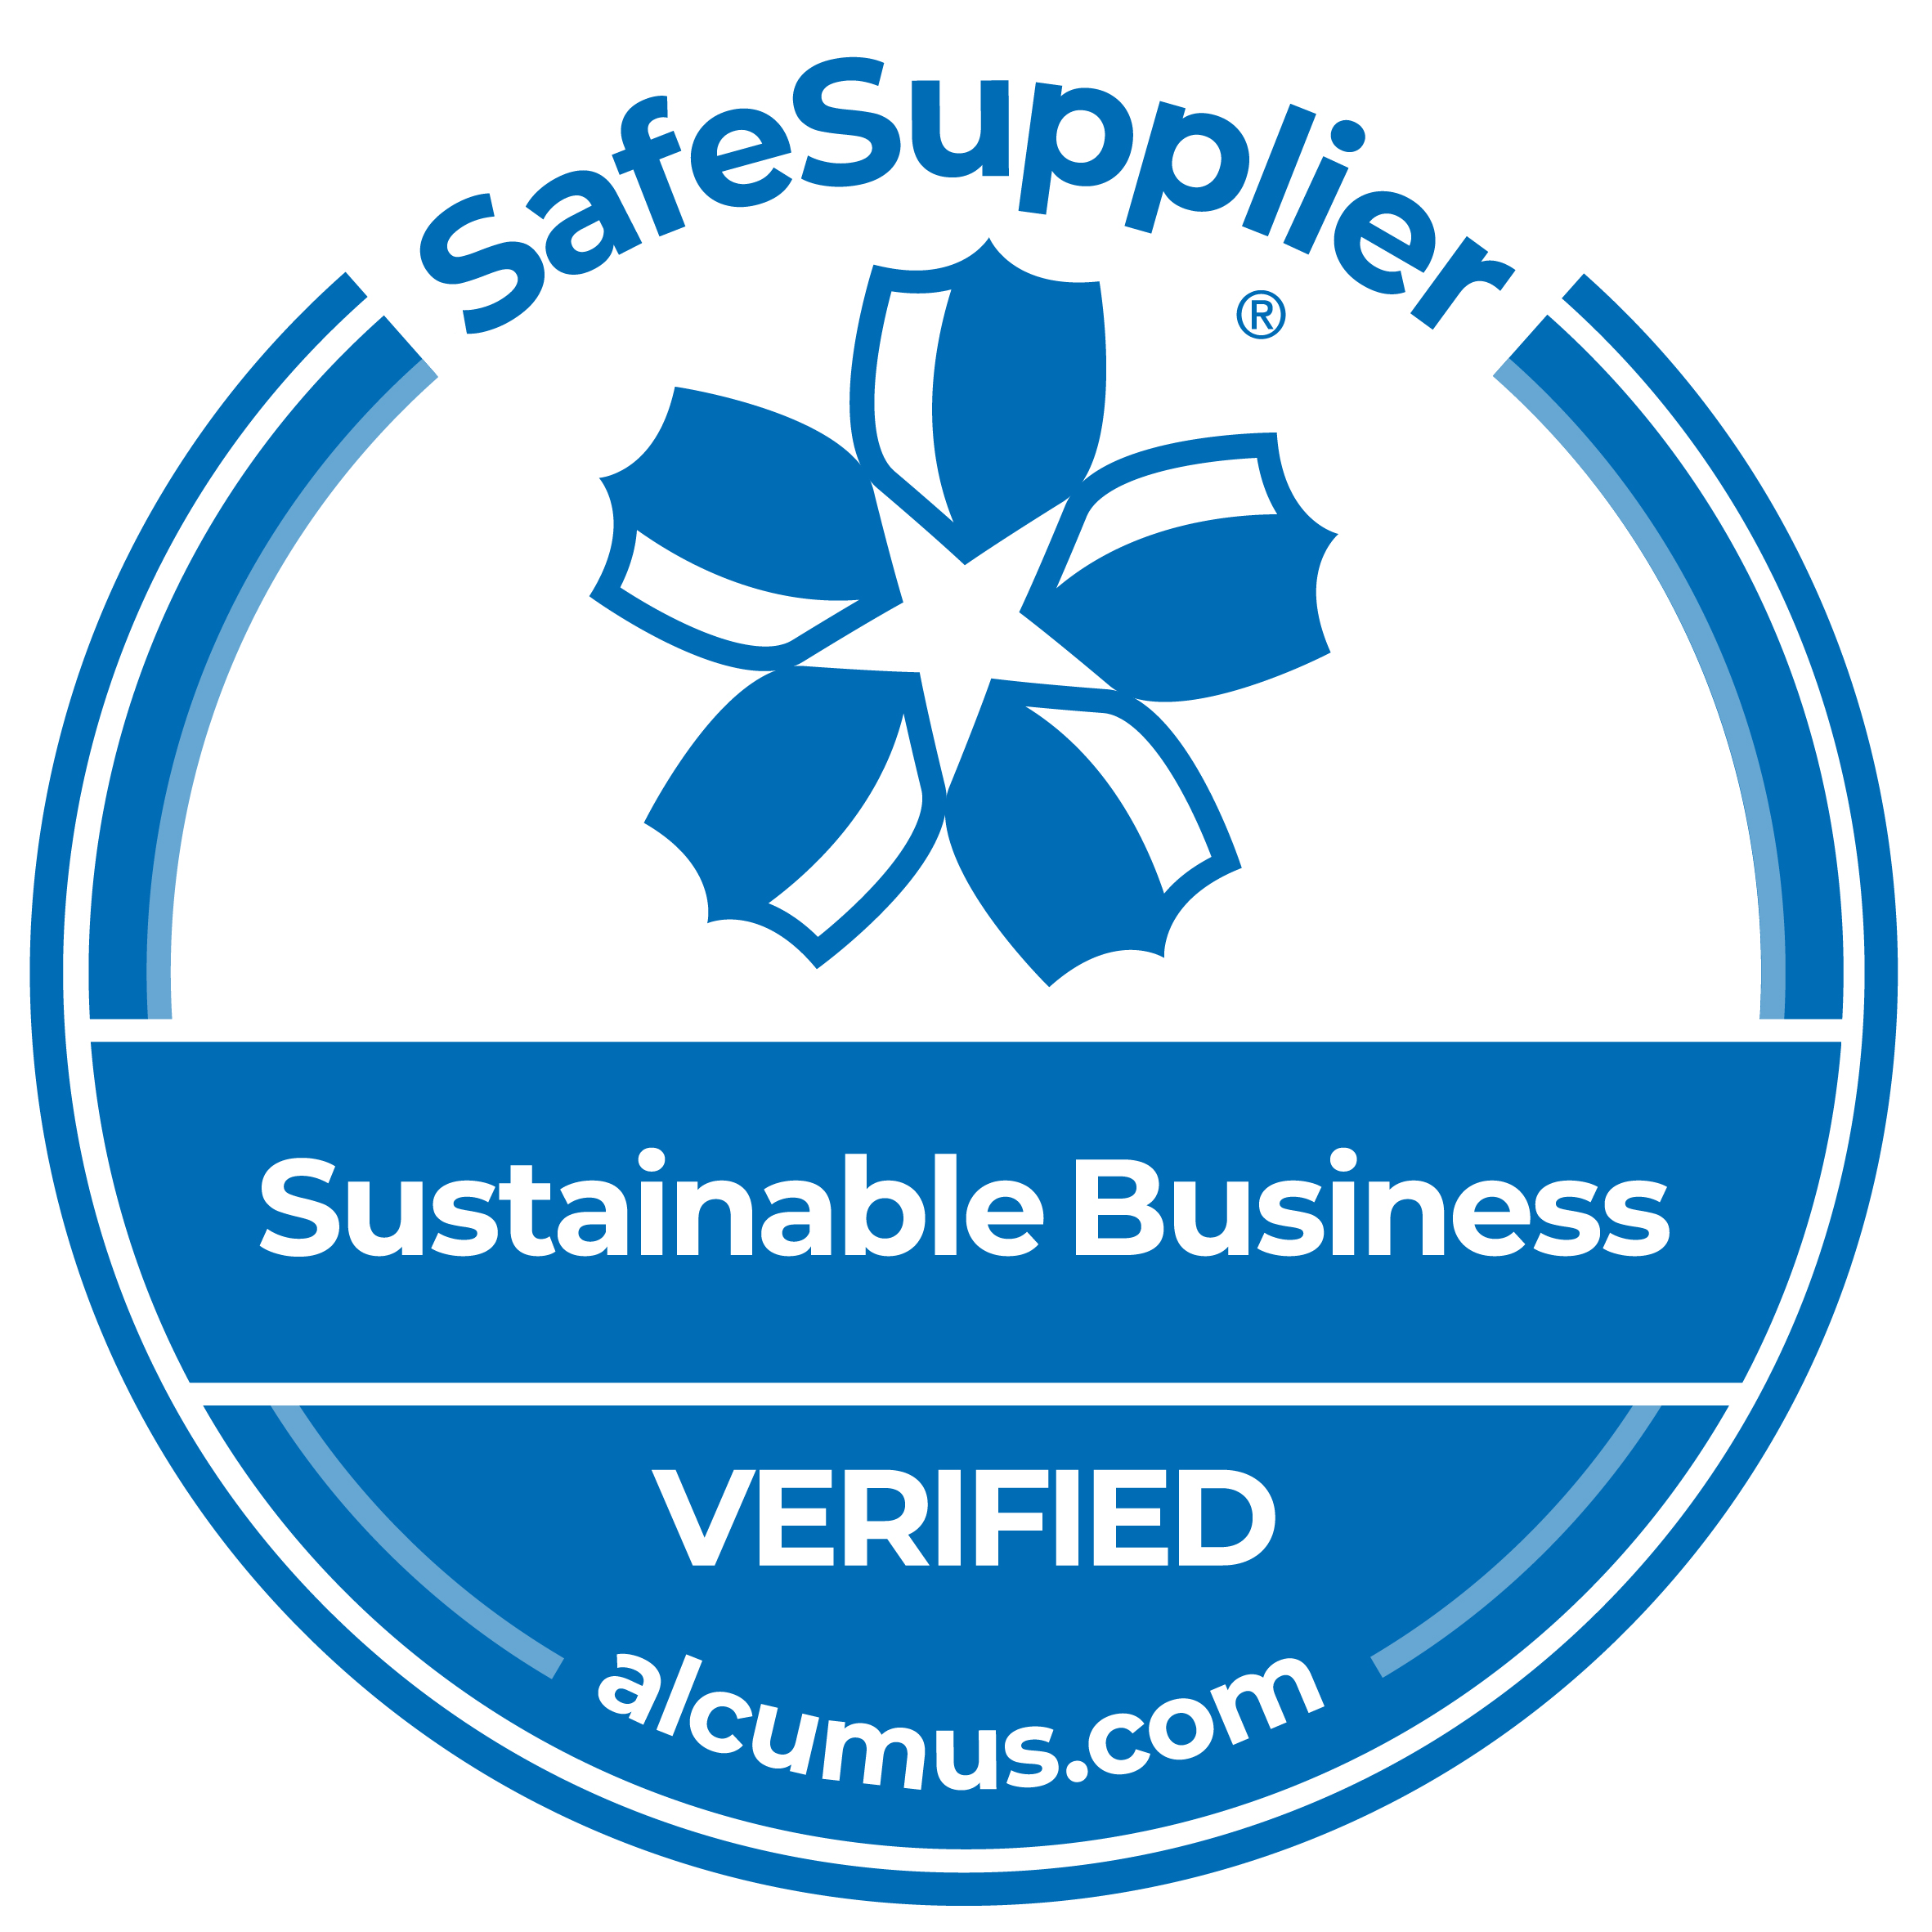 SafeSupplier Sustainable Business Verified alcumus.com